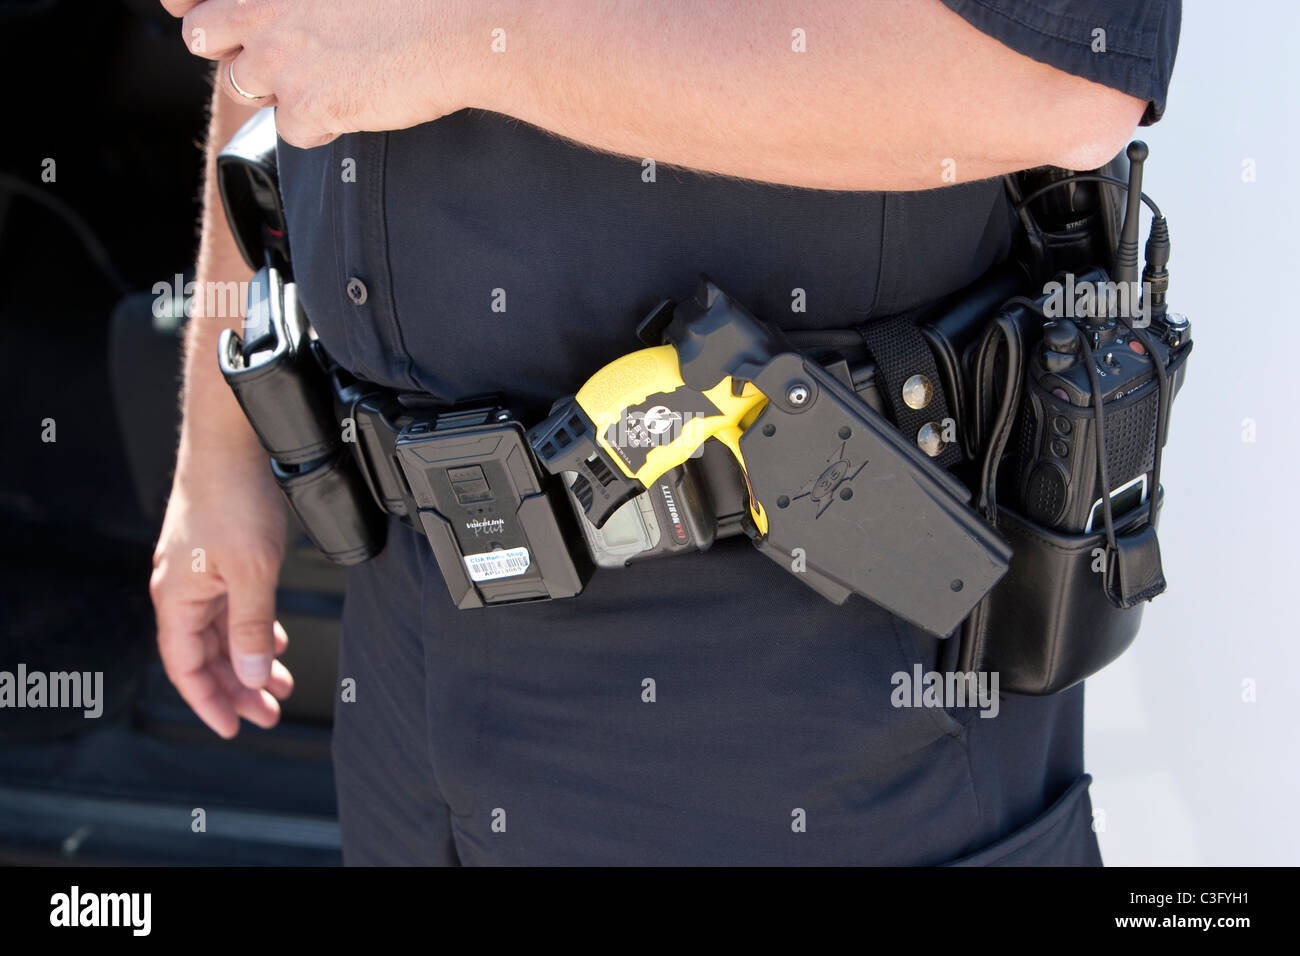 Police officer's duty belt includes a yellow Taser 'stun gun' in a holster. Stock Photo